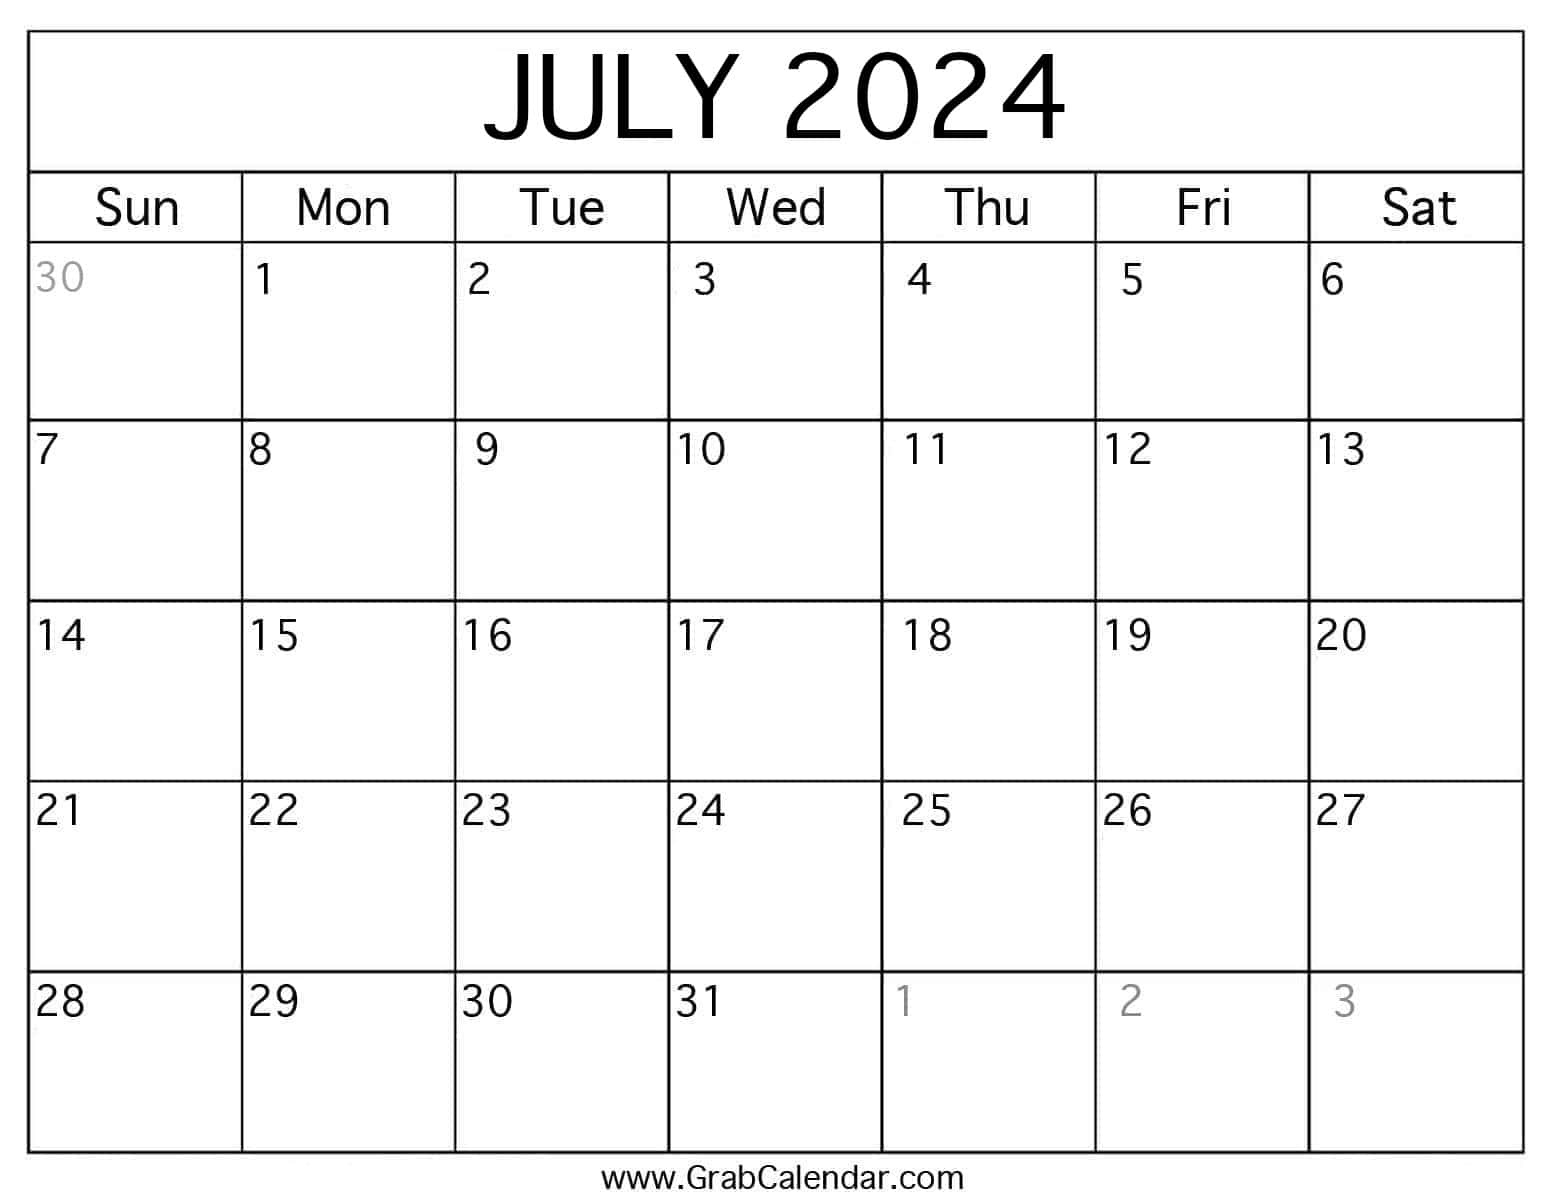 Printable July 2024 Calendar intended for Calendar Page July 2024